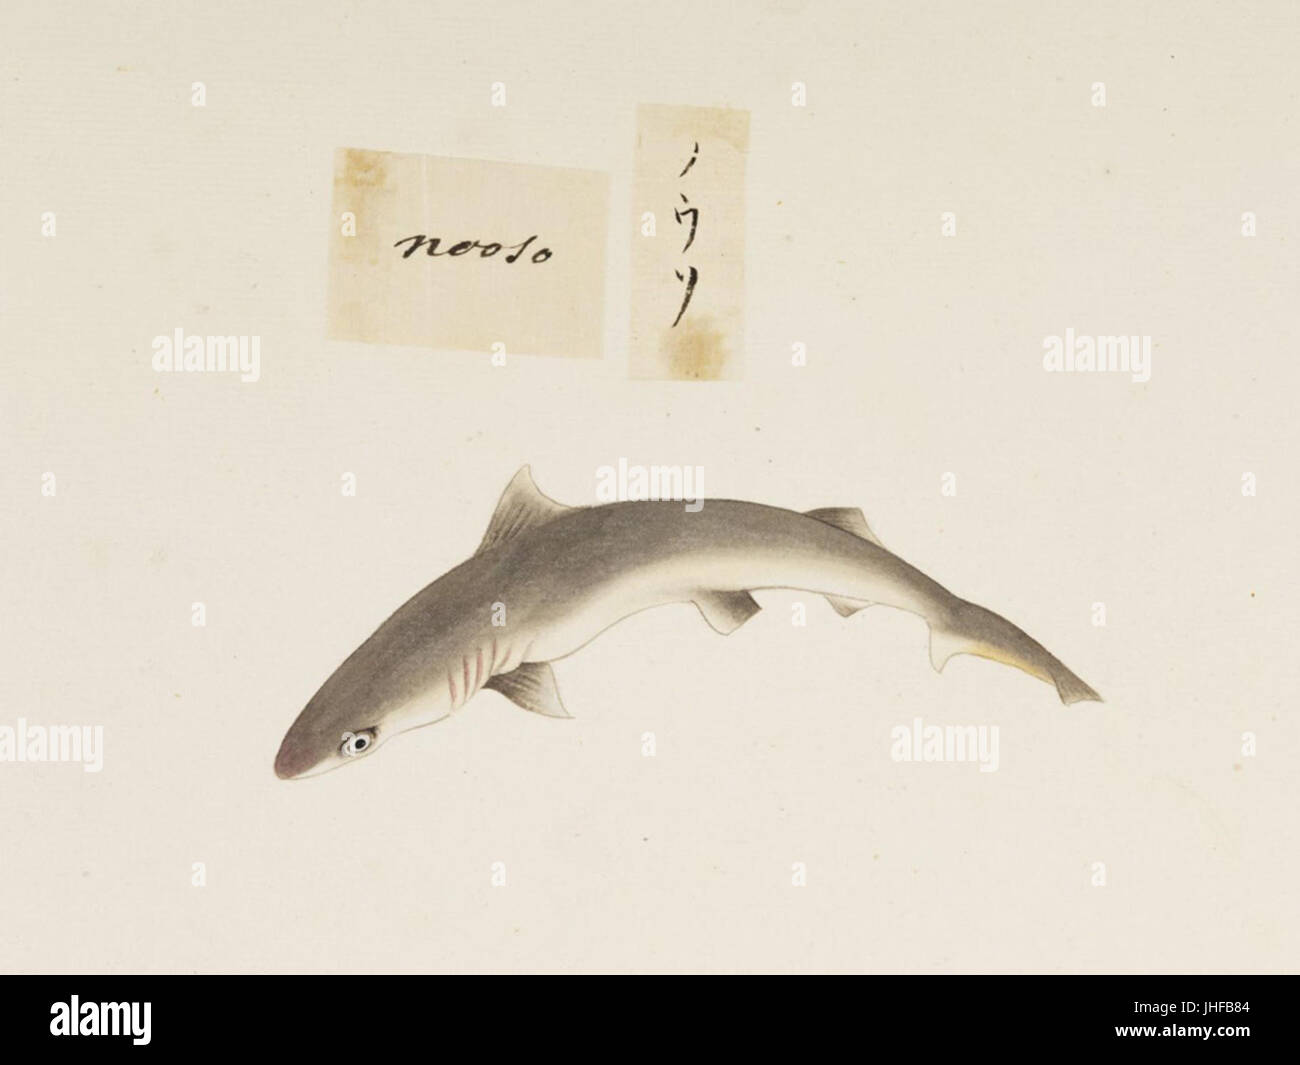 Naturalis Biodiversity Center - RMNH.ART.529 - Unidentified fish - Kawahara Keiga - 1823 - 1829 - Siebold Collection - pencil drawing - water colour Stock Photo